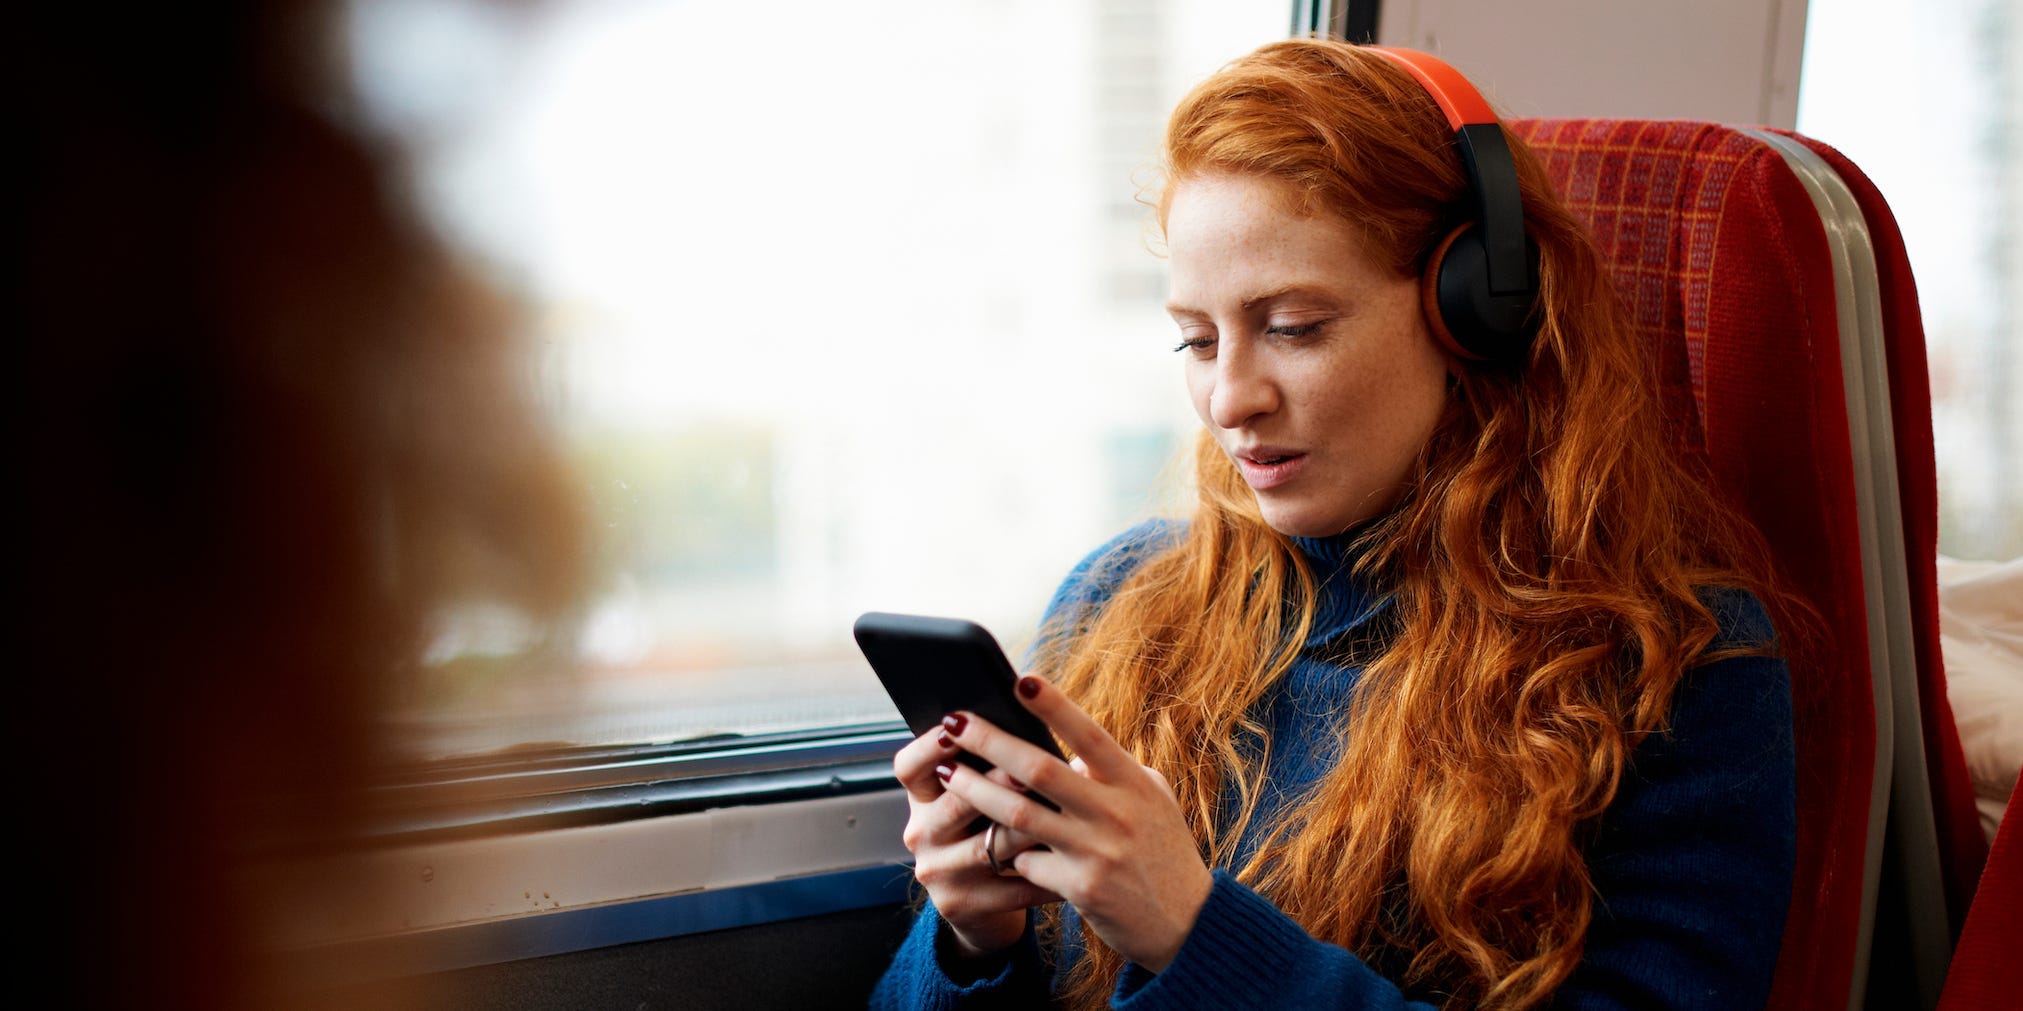 woman on train looking at phone headphones